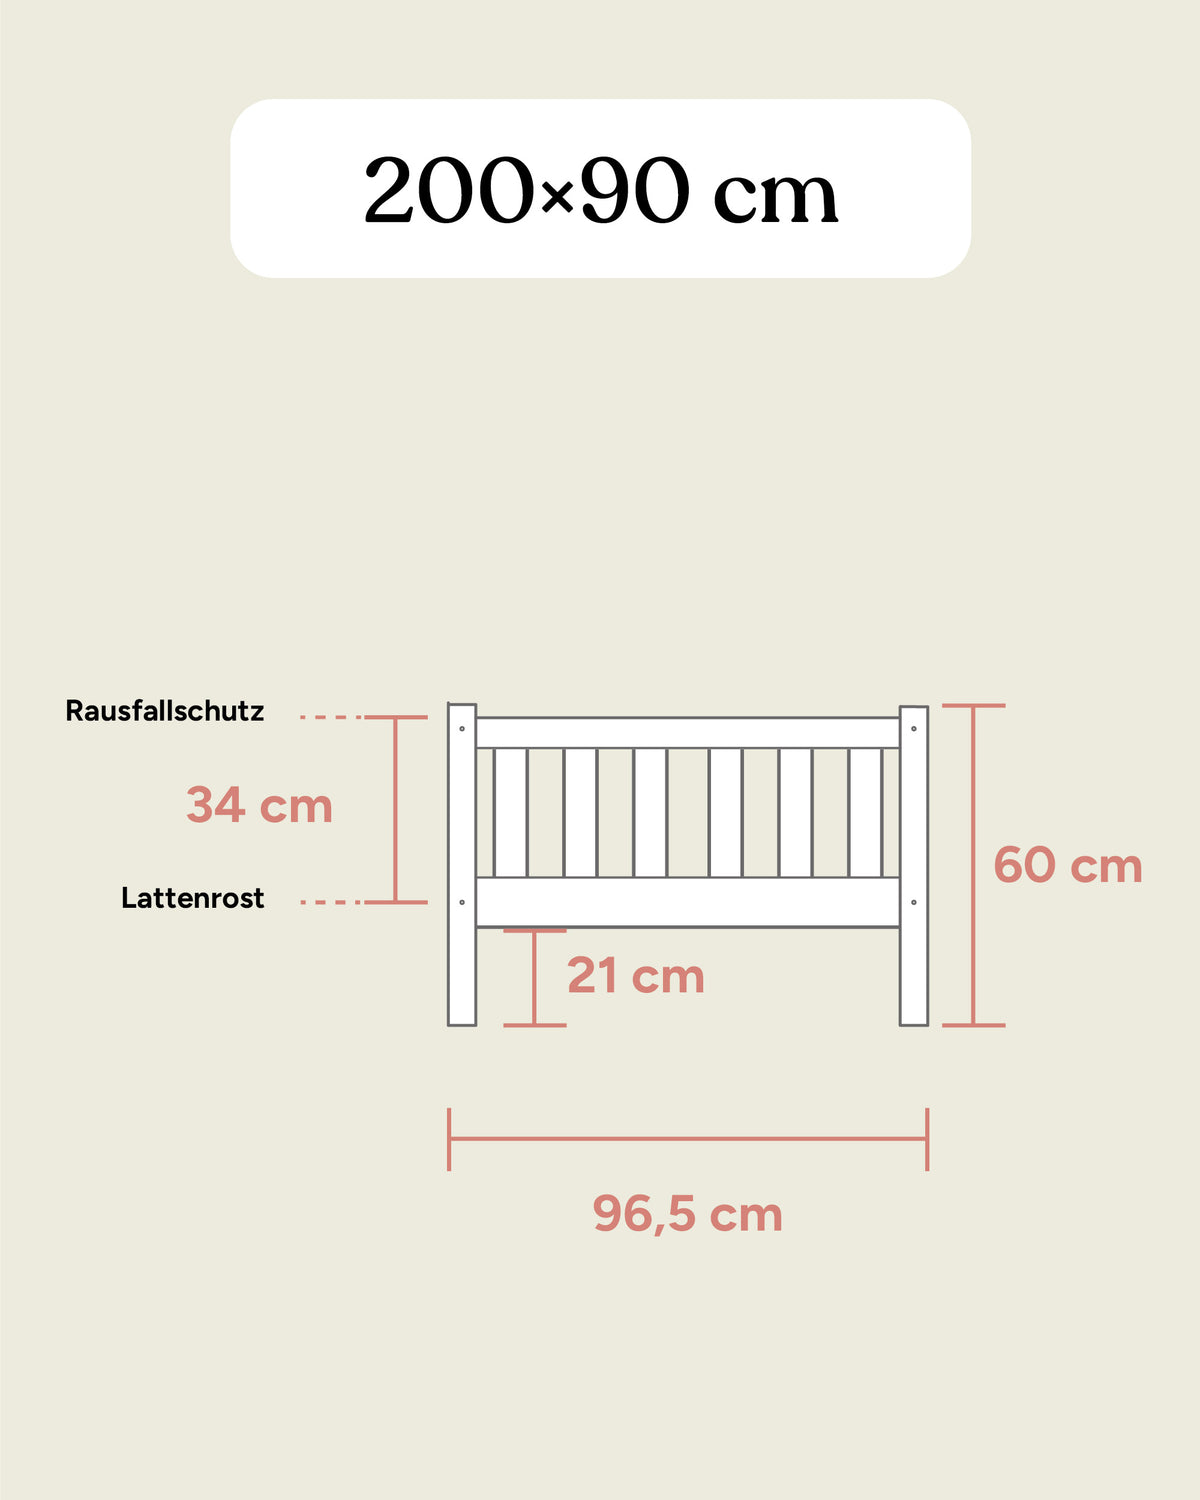 Maßangaben Kinderbett 200 mal 90 cm Frontansicht.